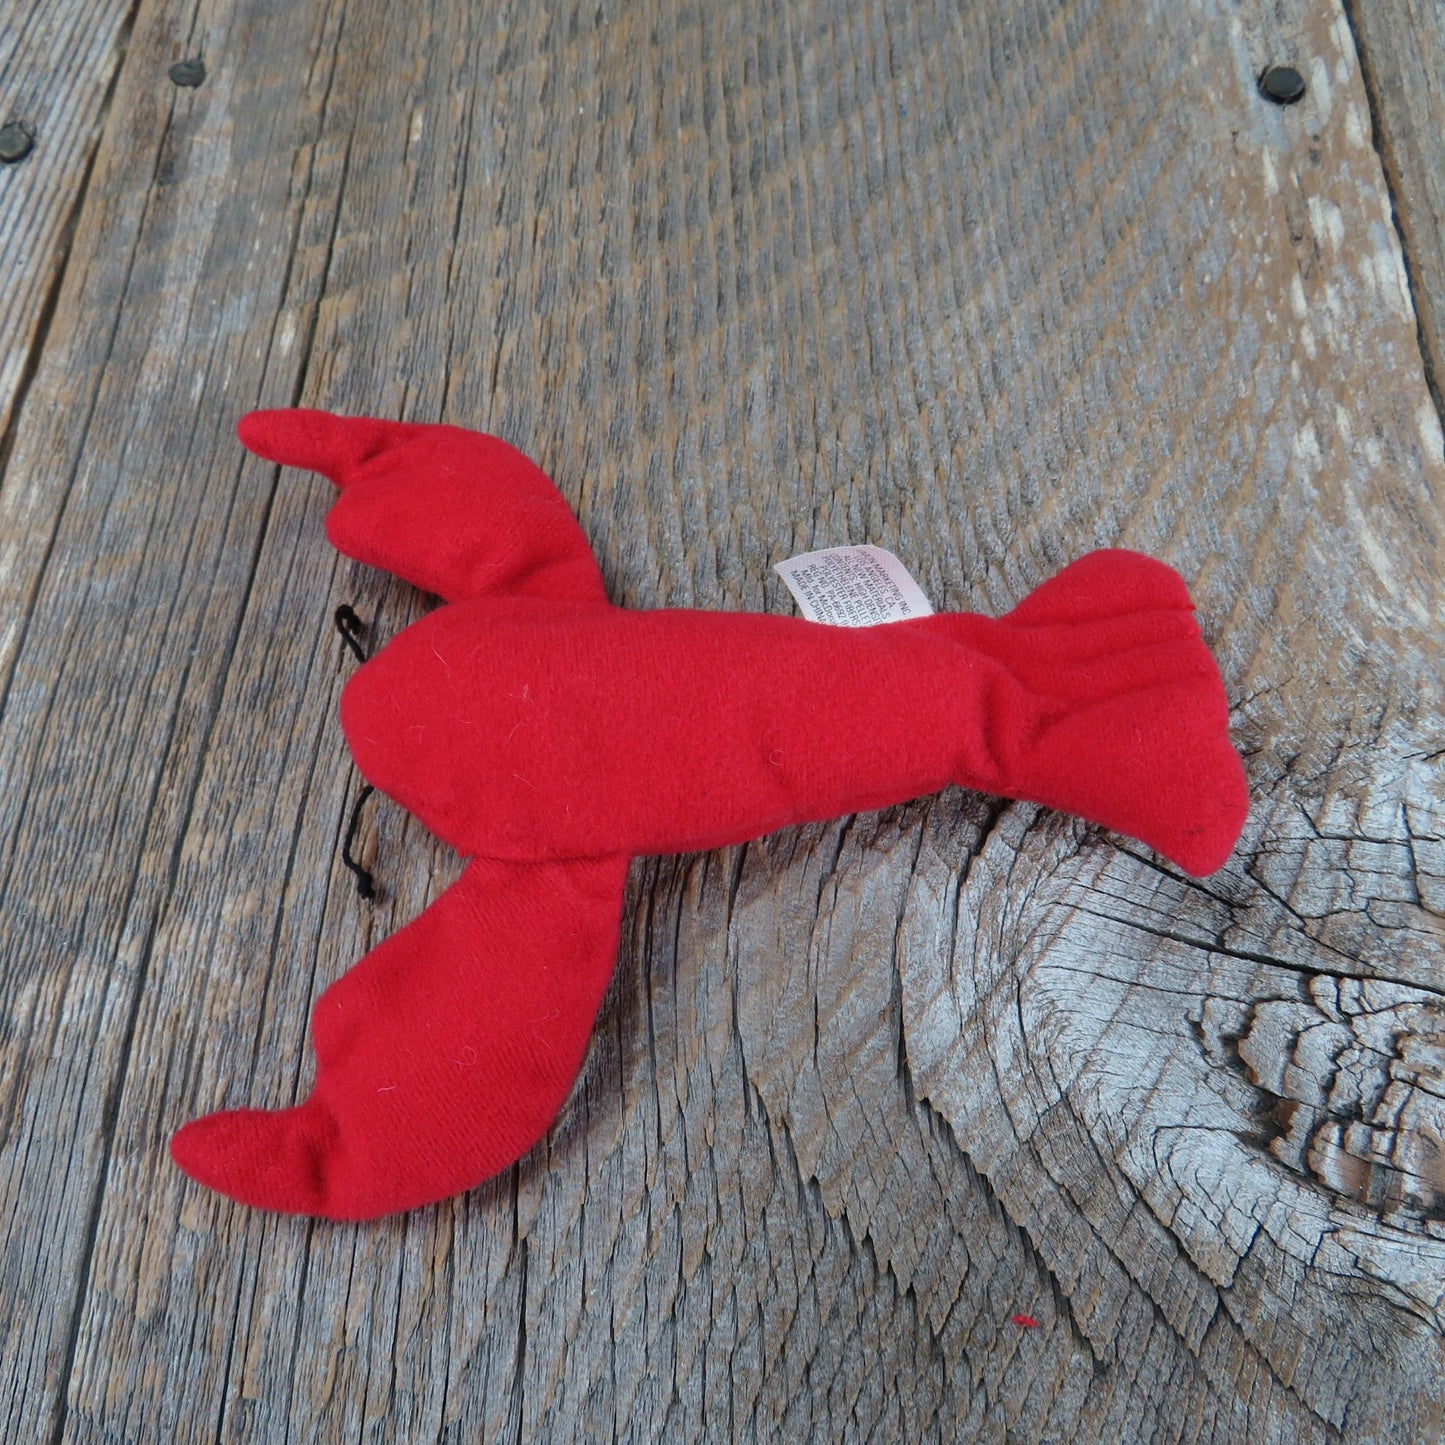 Vintage Lobster Plush Pinchers Ty Teenie Beanie Babies Red 1993 Stuffed Animal